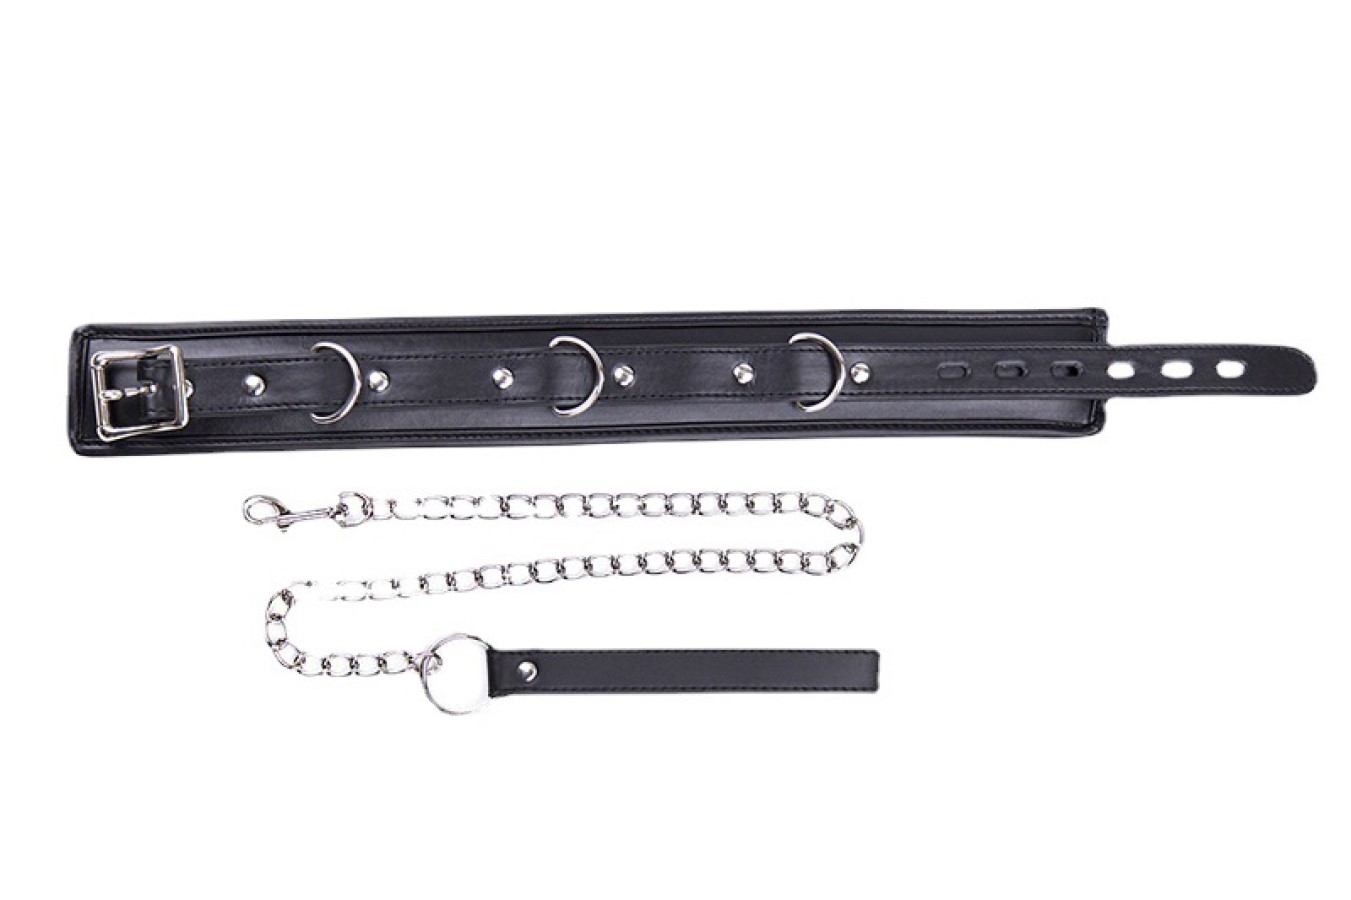 10pcs - Adjustable PU Leather Choker Padded SM Neck Collar With Chain Lead Leash Restraint|GCSM028|UK SELLER